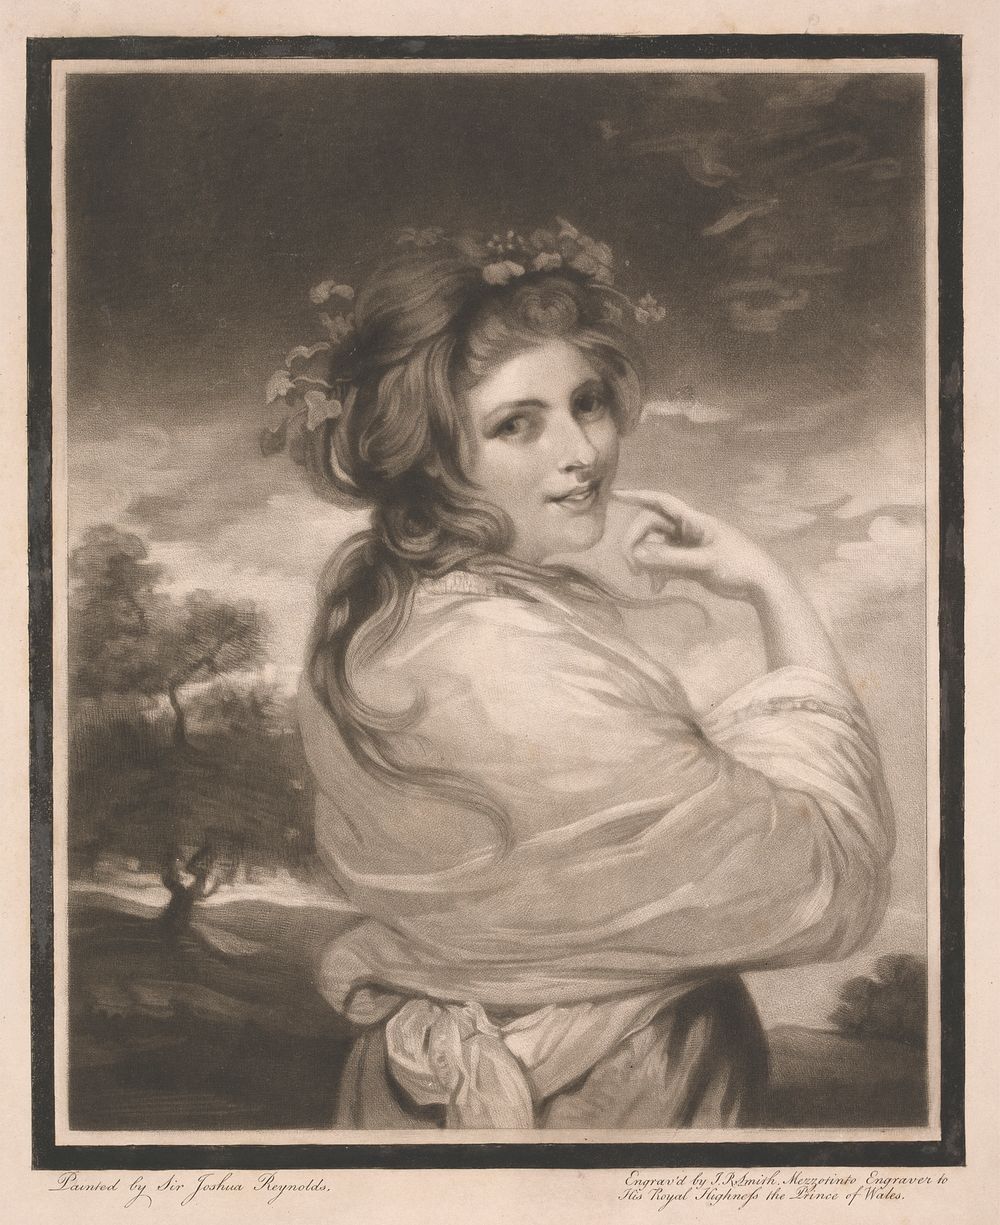 Lady Hamilton as a Bacchante